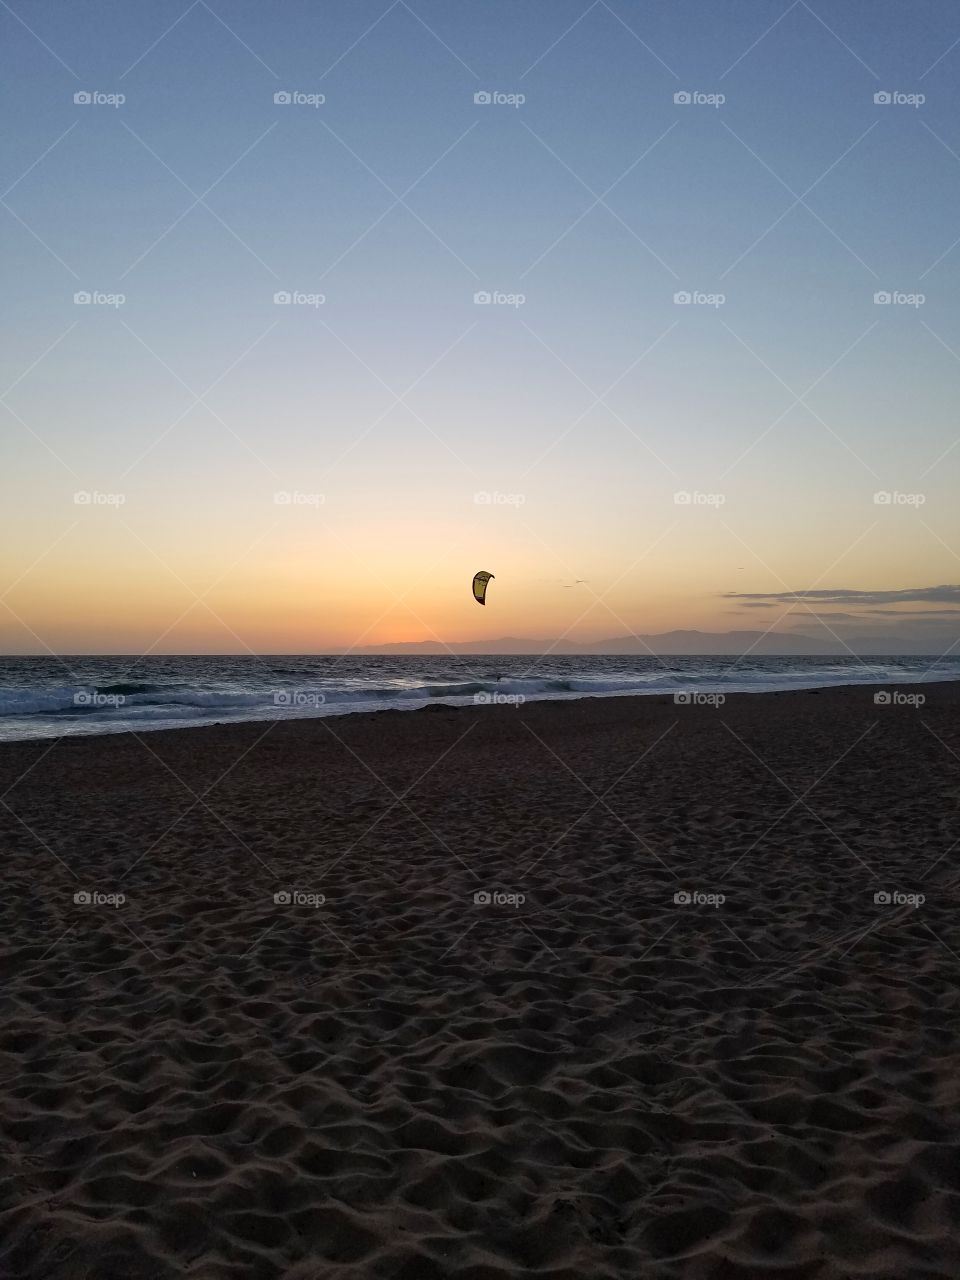 Sunset Kite-Surfing